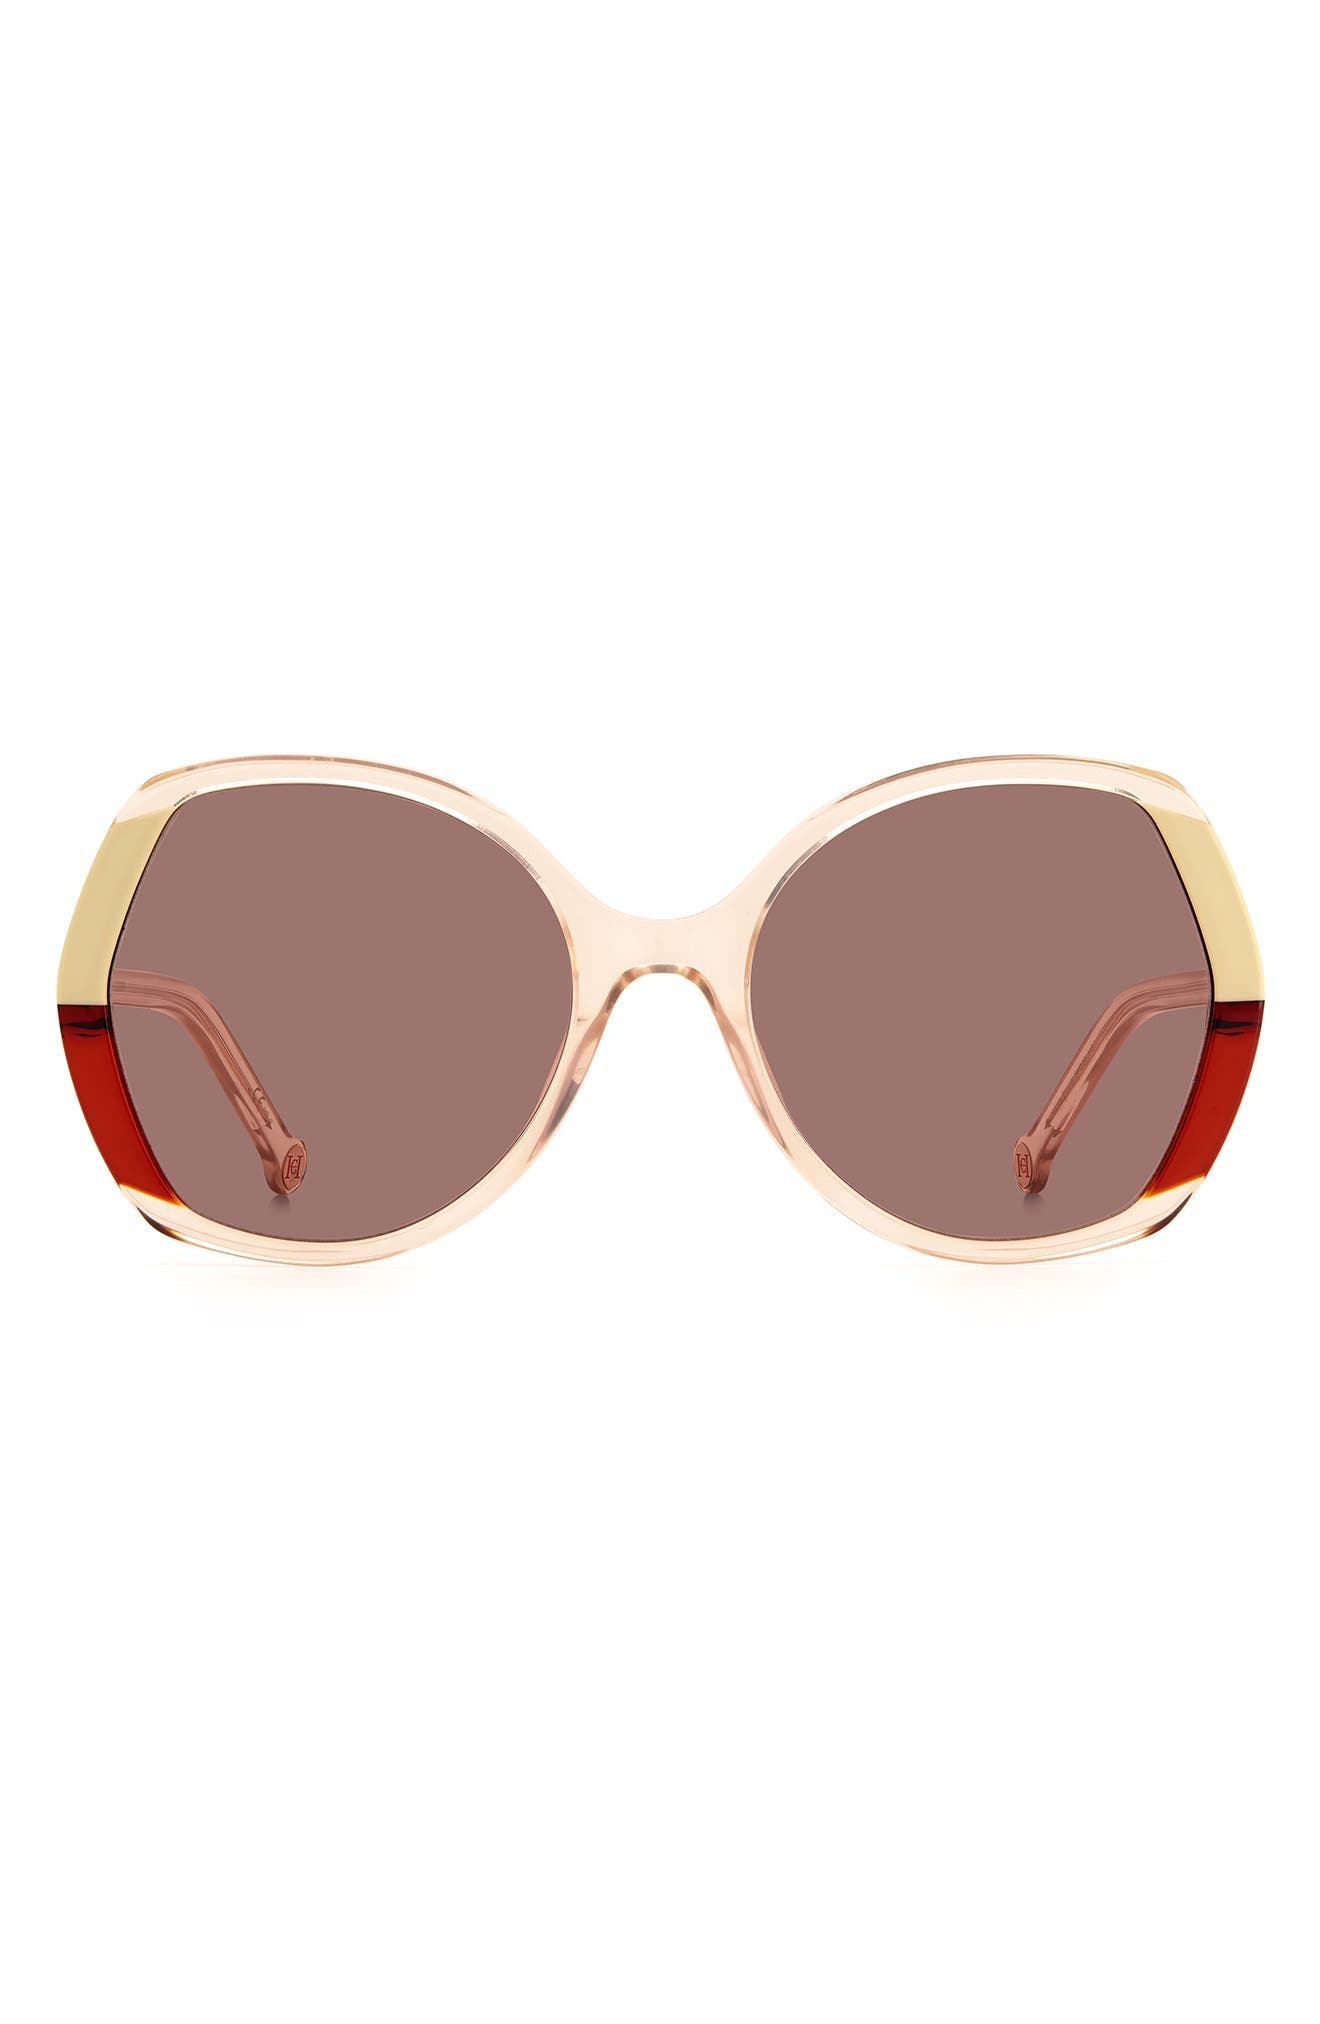 Carolina Herrera Square Sunglasses in Nude Beige /Burgundy at Nordstrom